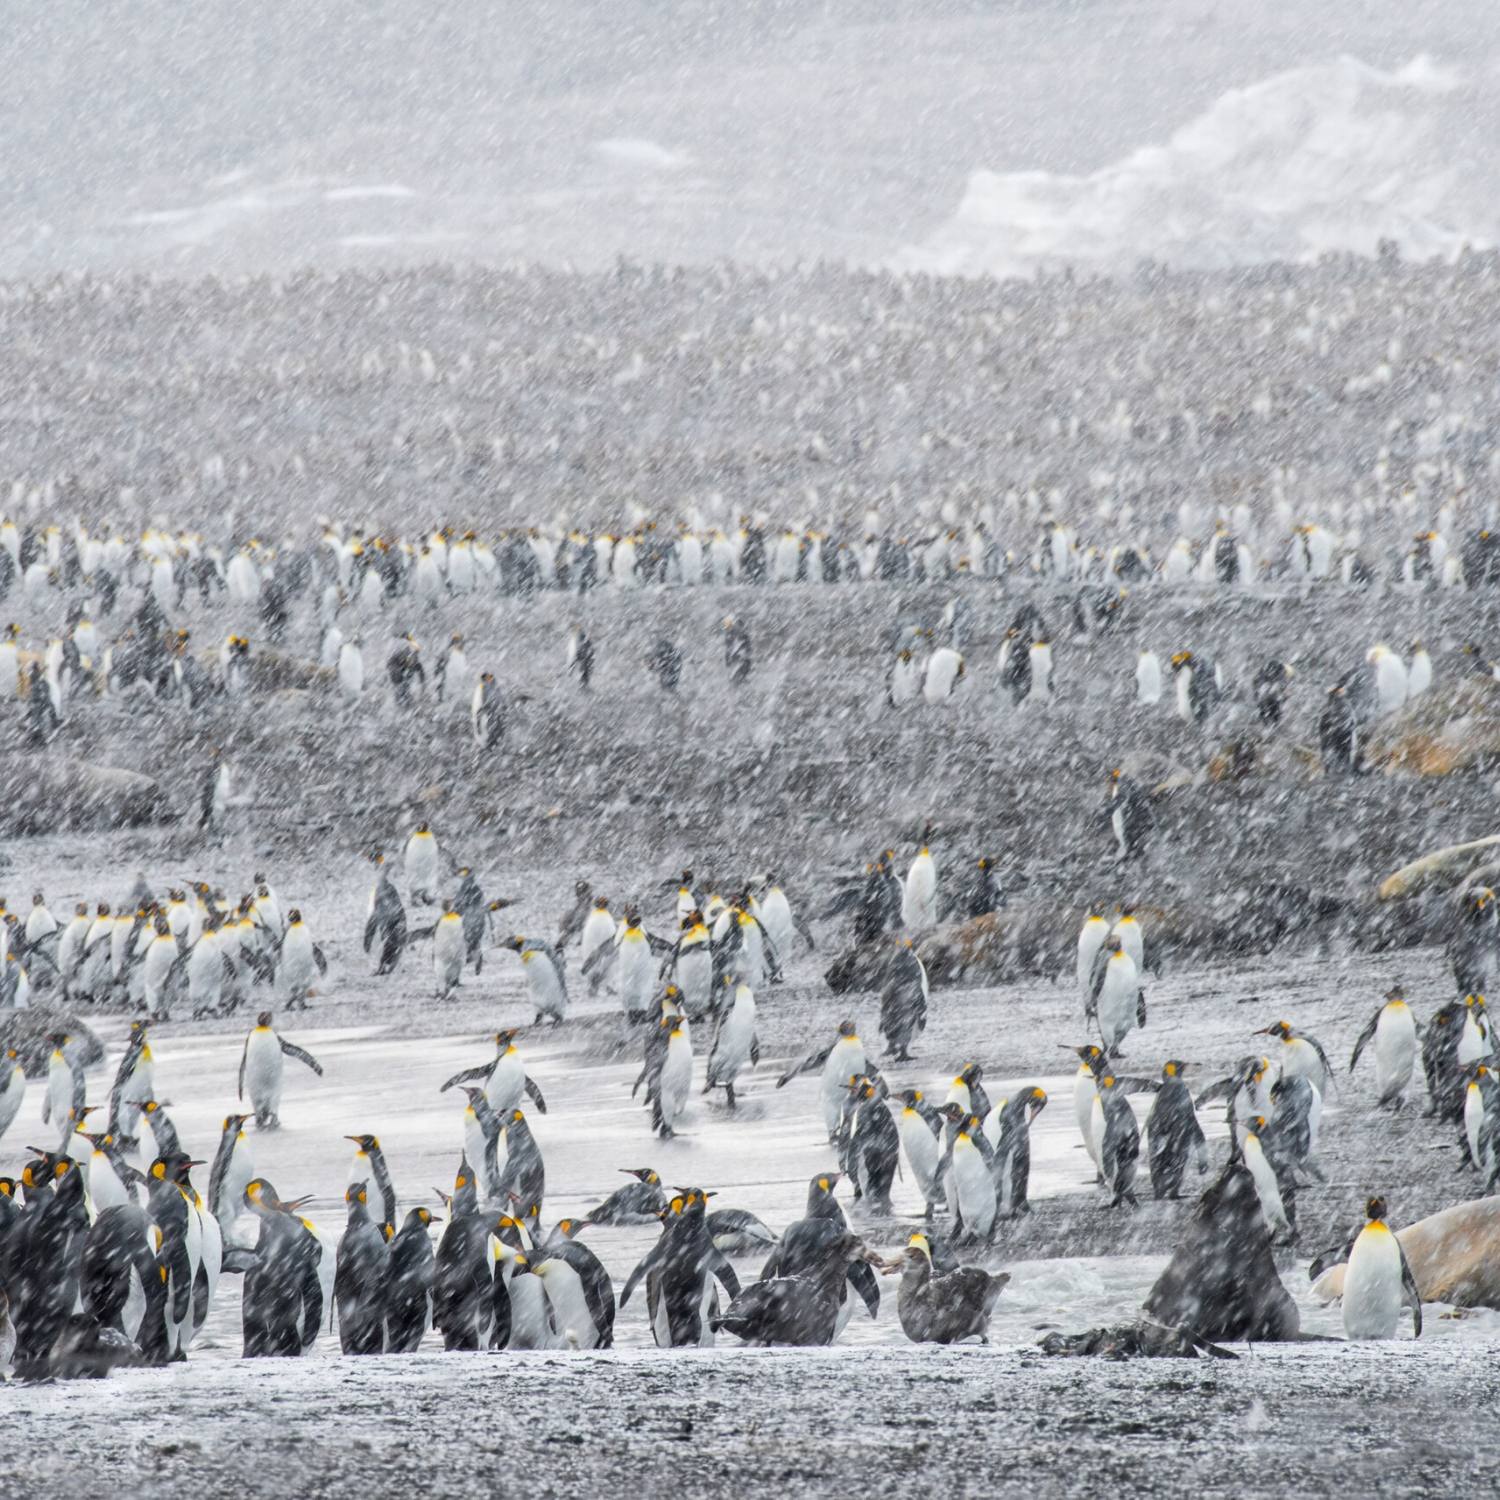 Wildlife Image of Penguins in South Georgia Antarctica taken by award-winning photographer Ignacio Palacios